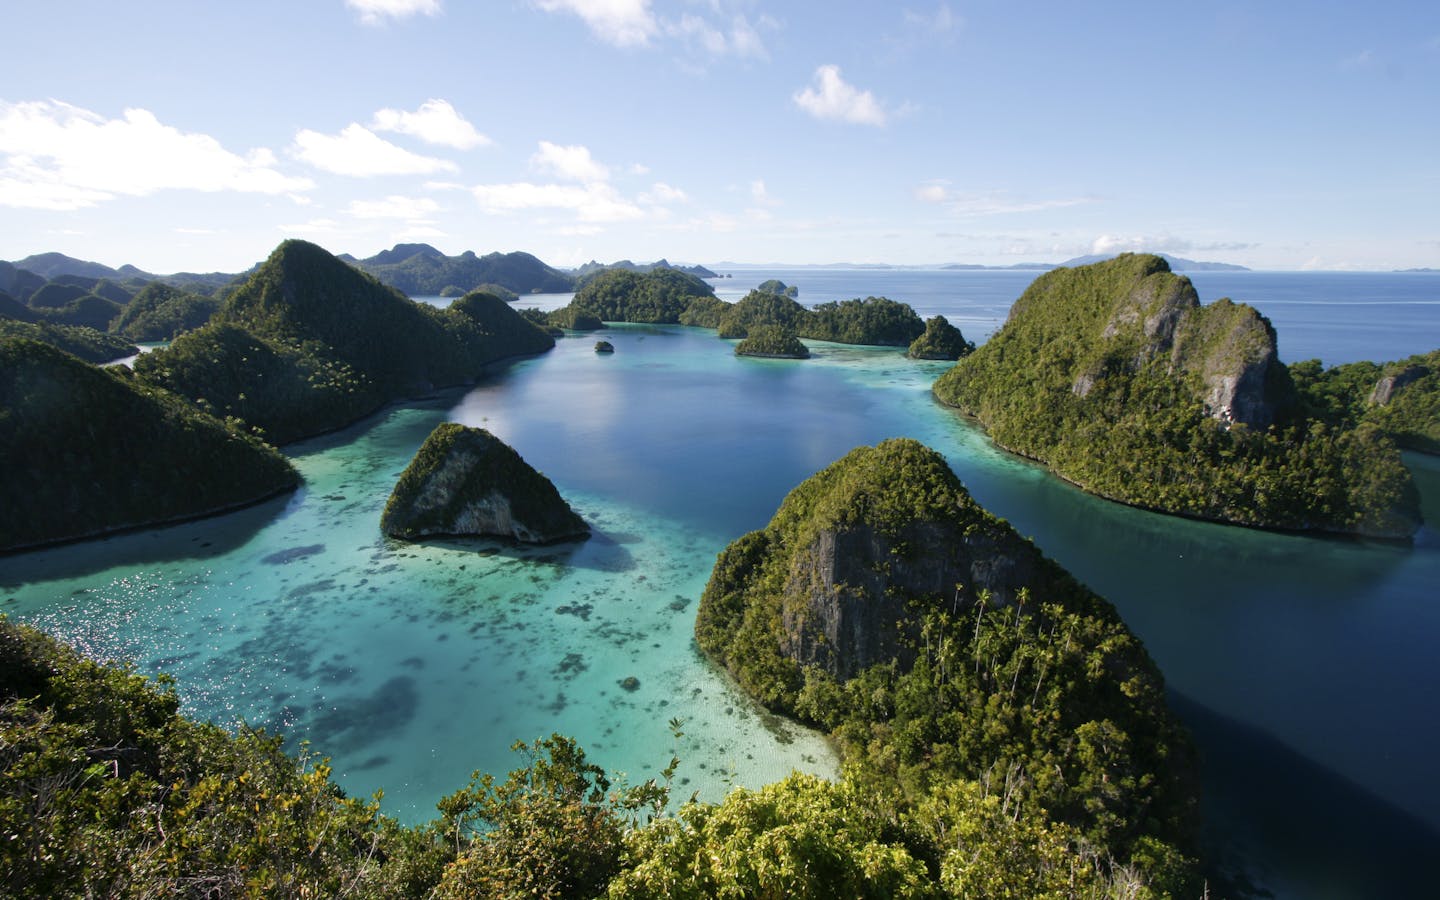 A view of Indonesia's Raja Ampat archipelago